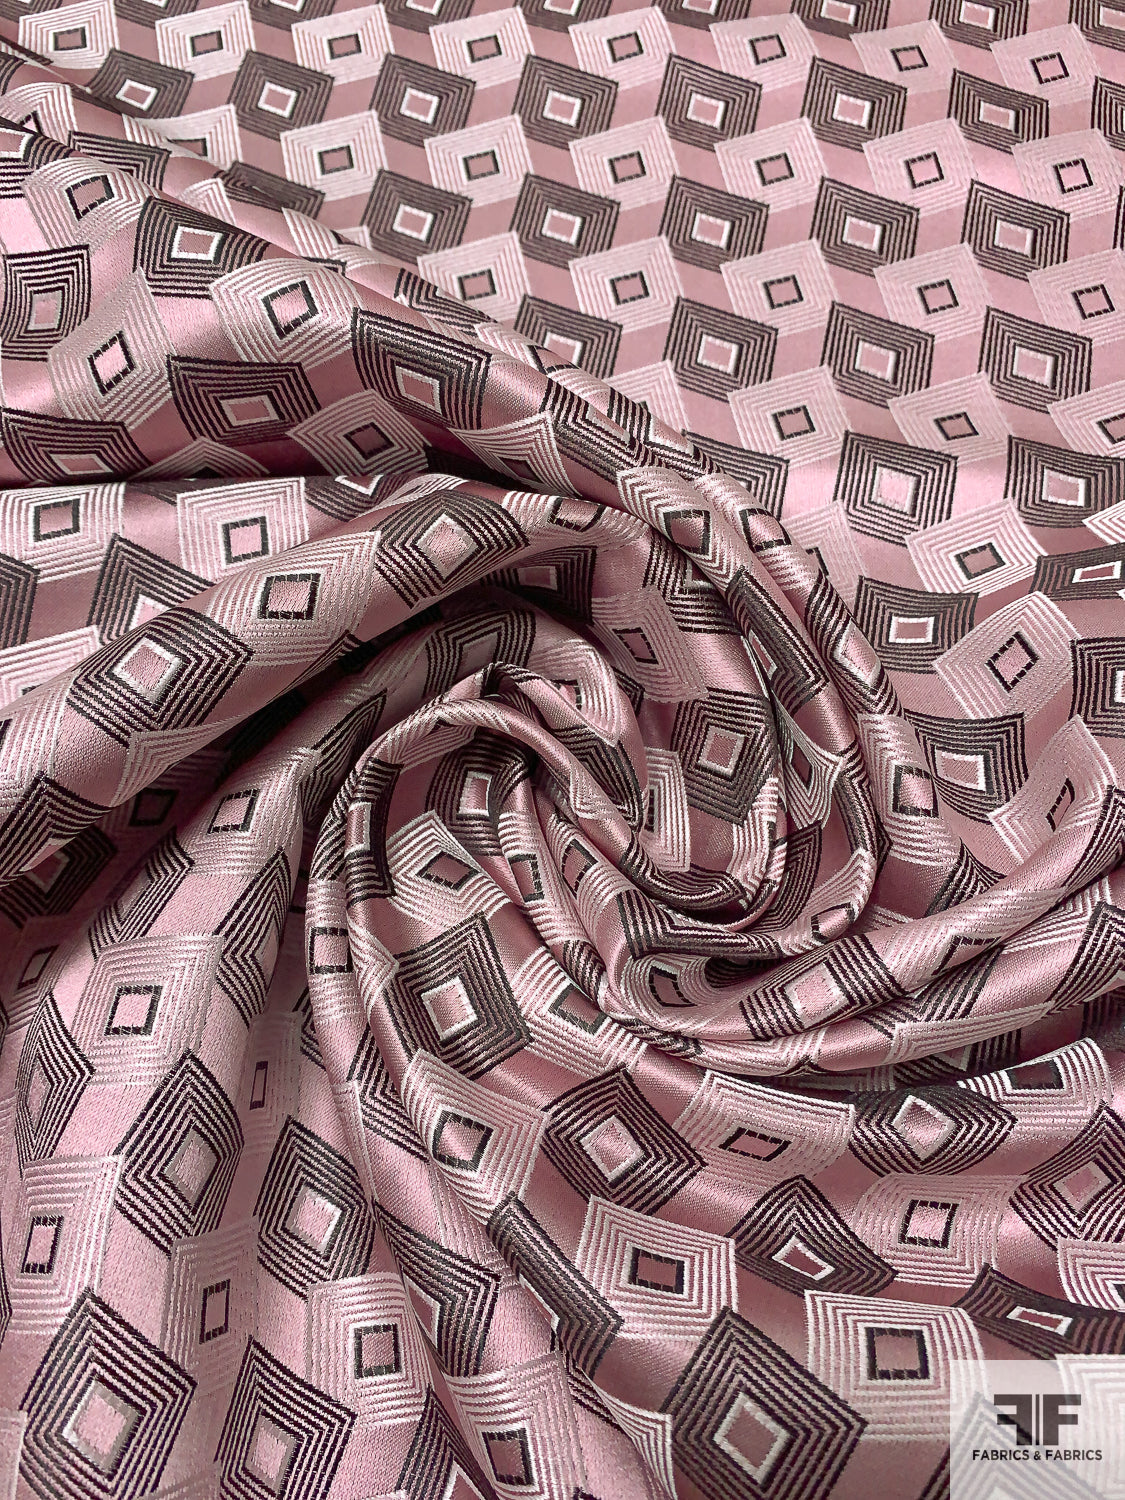 Squares on Squares Silk Necktie Jacquard Brocade - Dusty Rose / Black / White